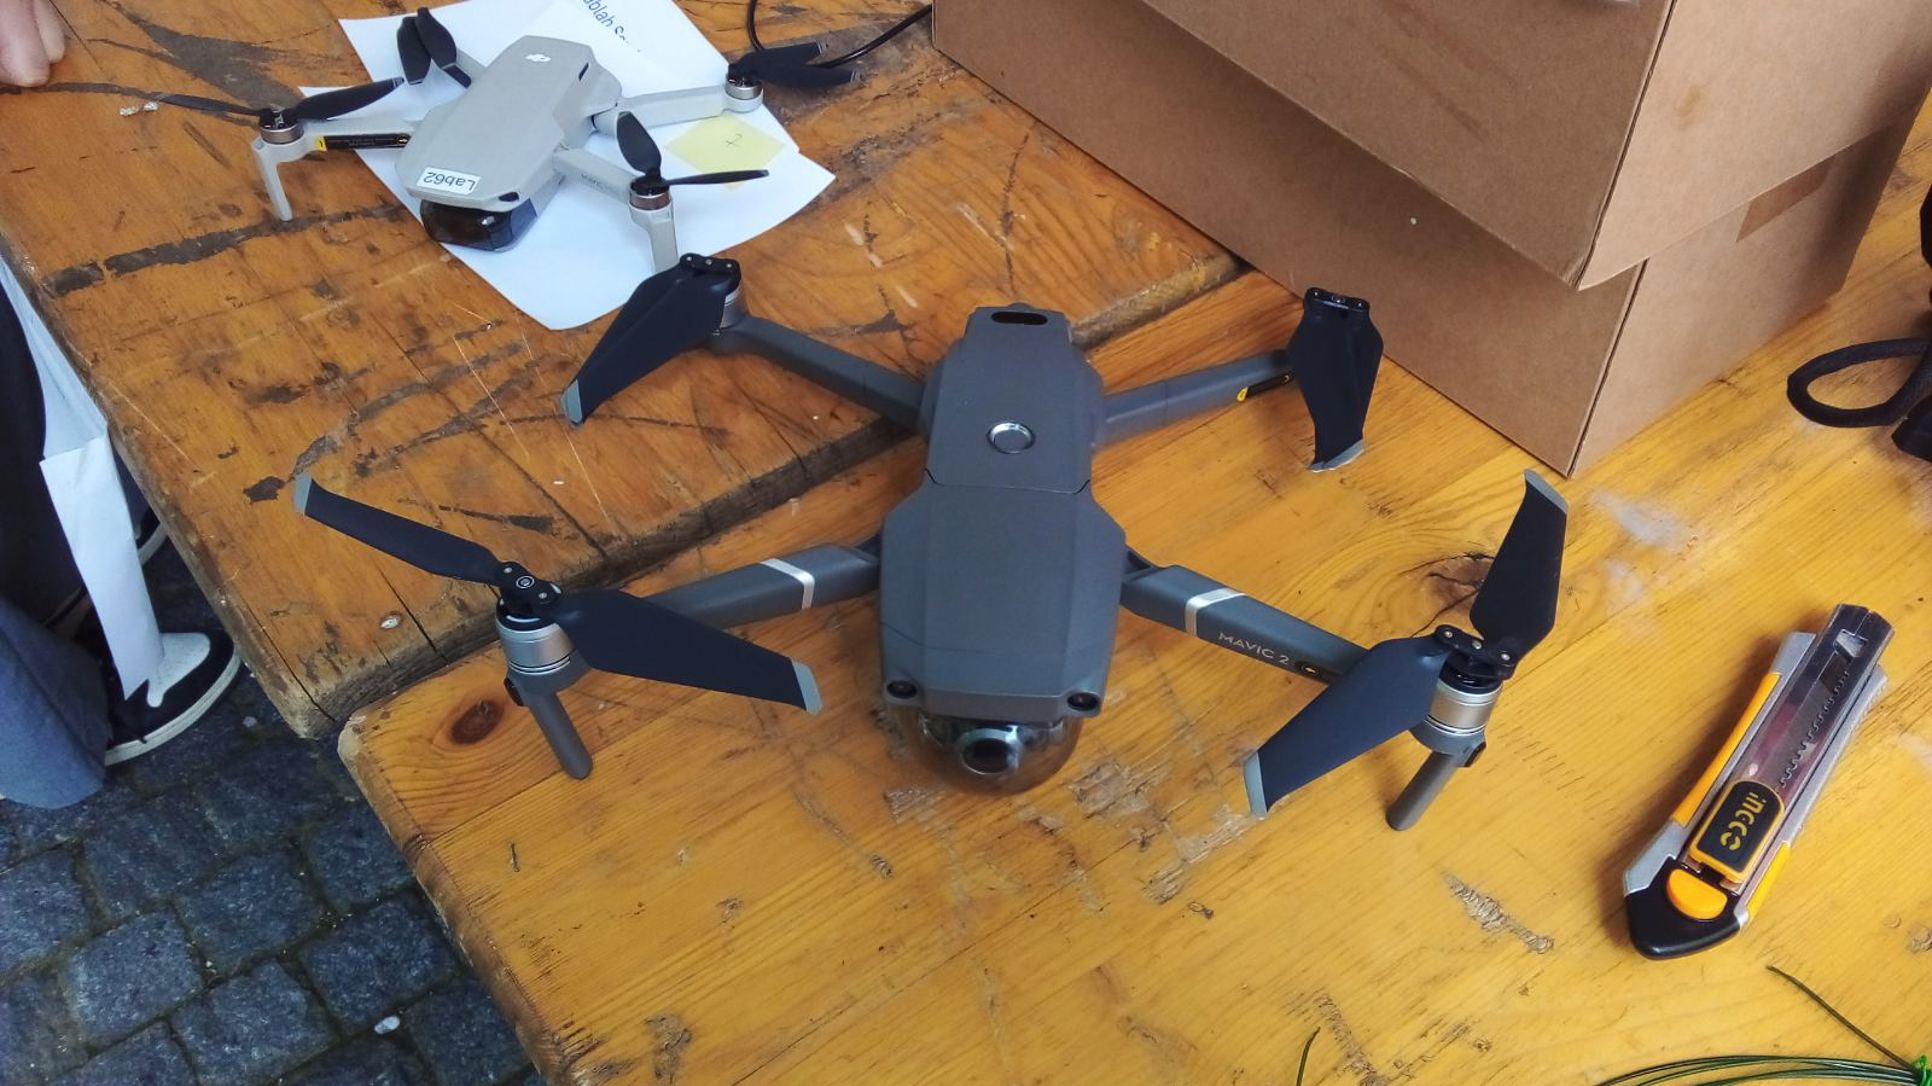 10. Drone Fablab